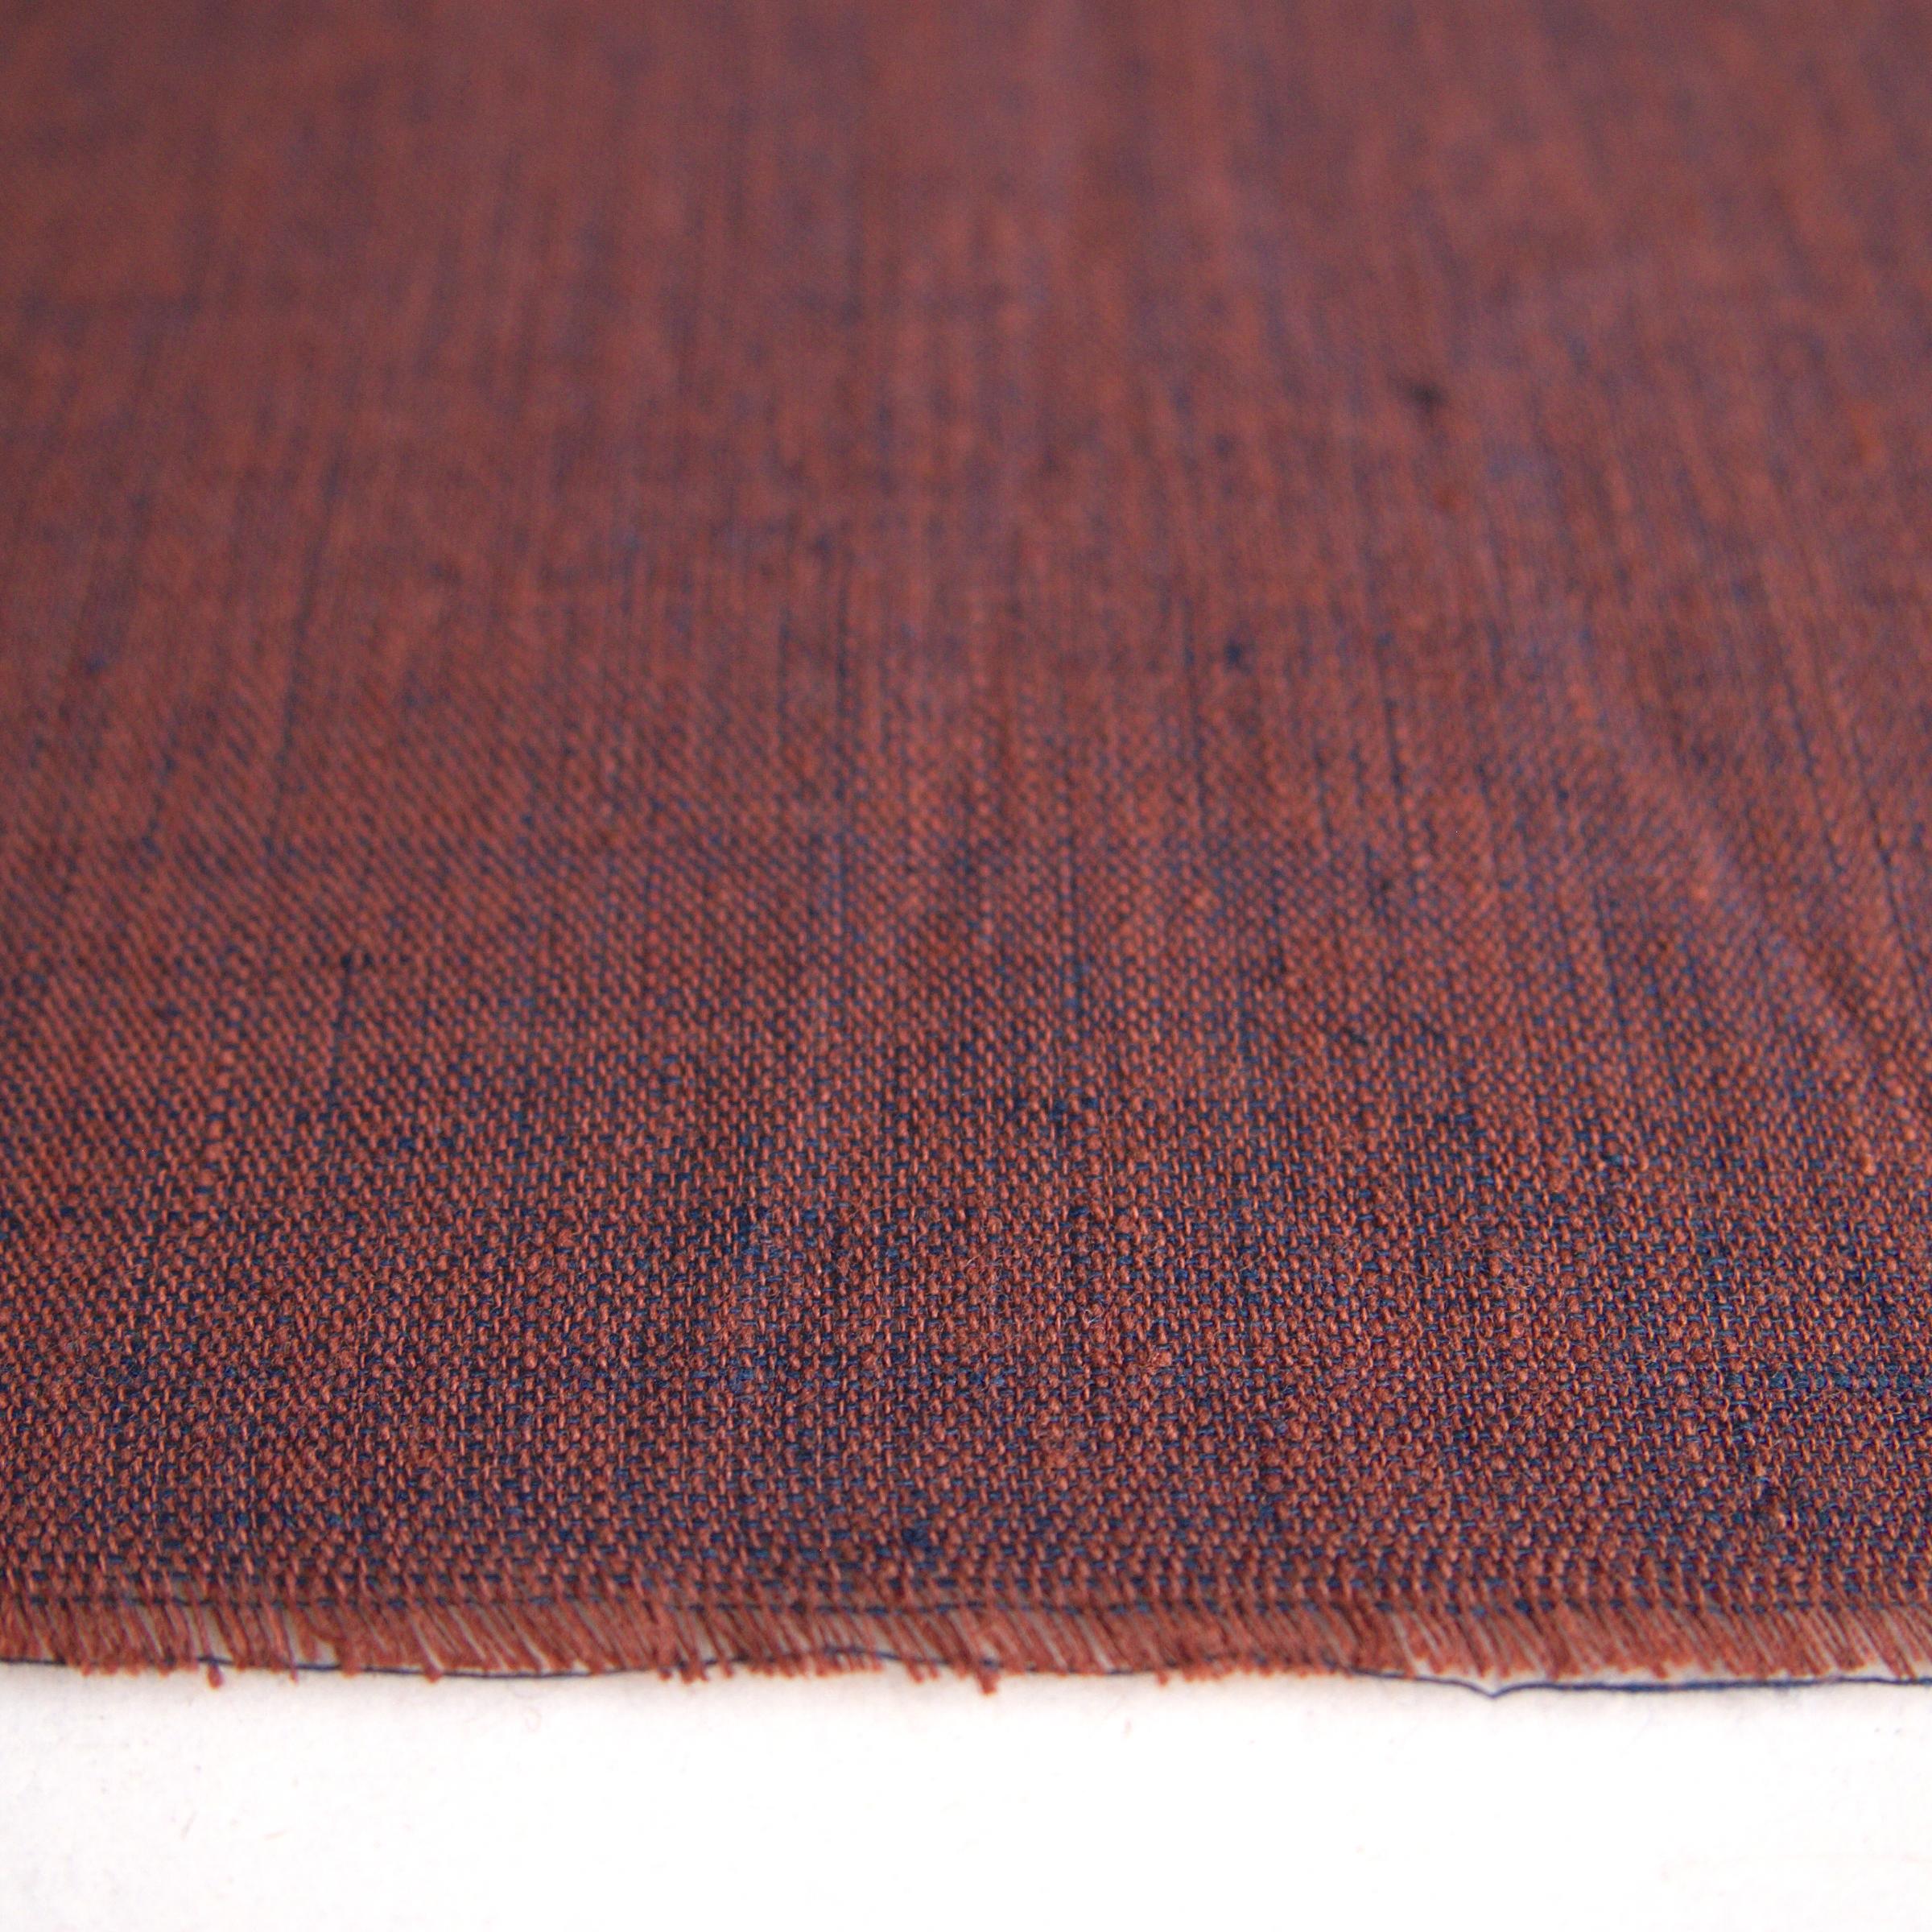 100 % Handloom Woven Cotton - Cross Colour - Brown Warp, Natural Indigo Weft - Close Up